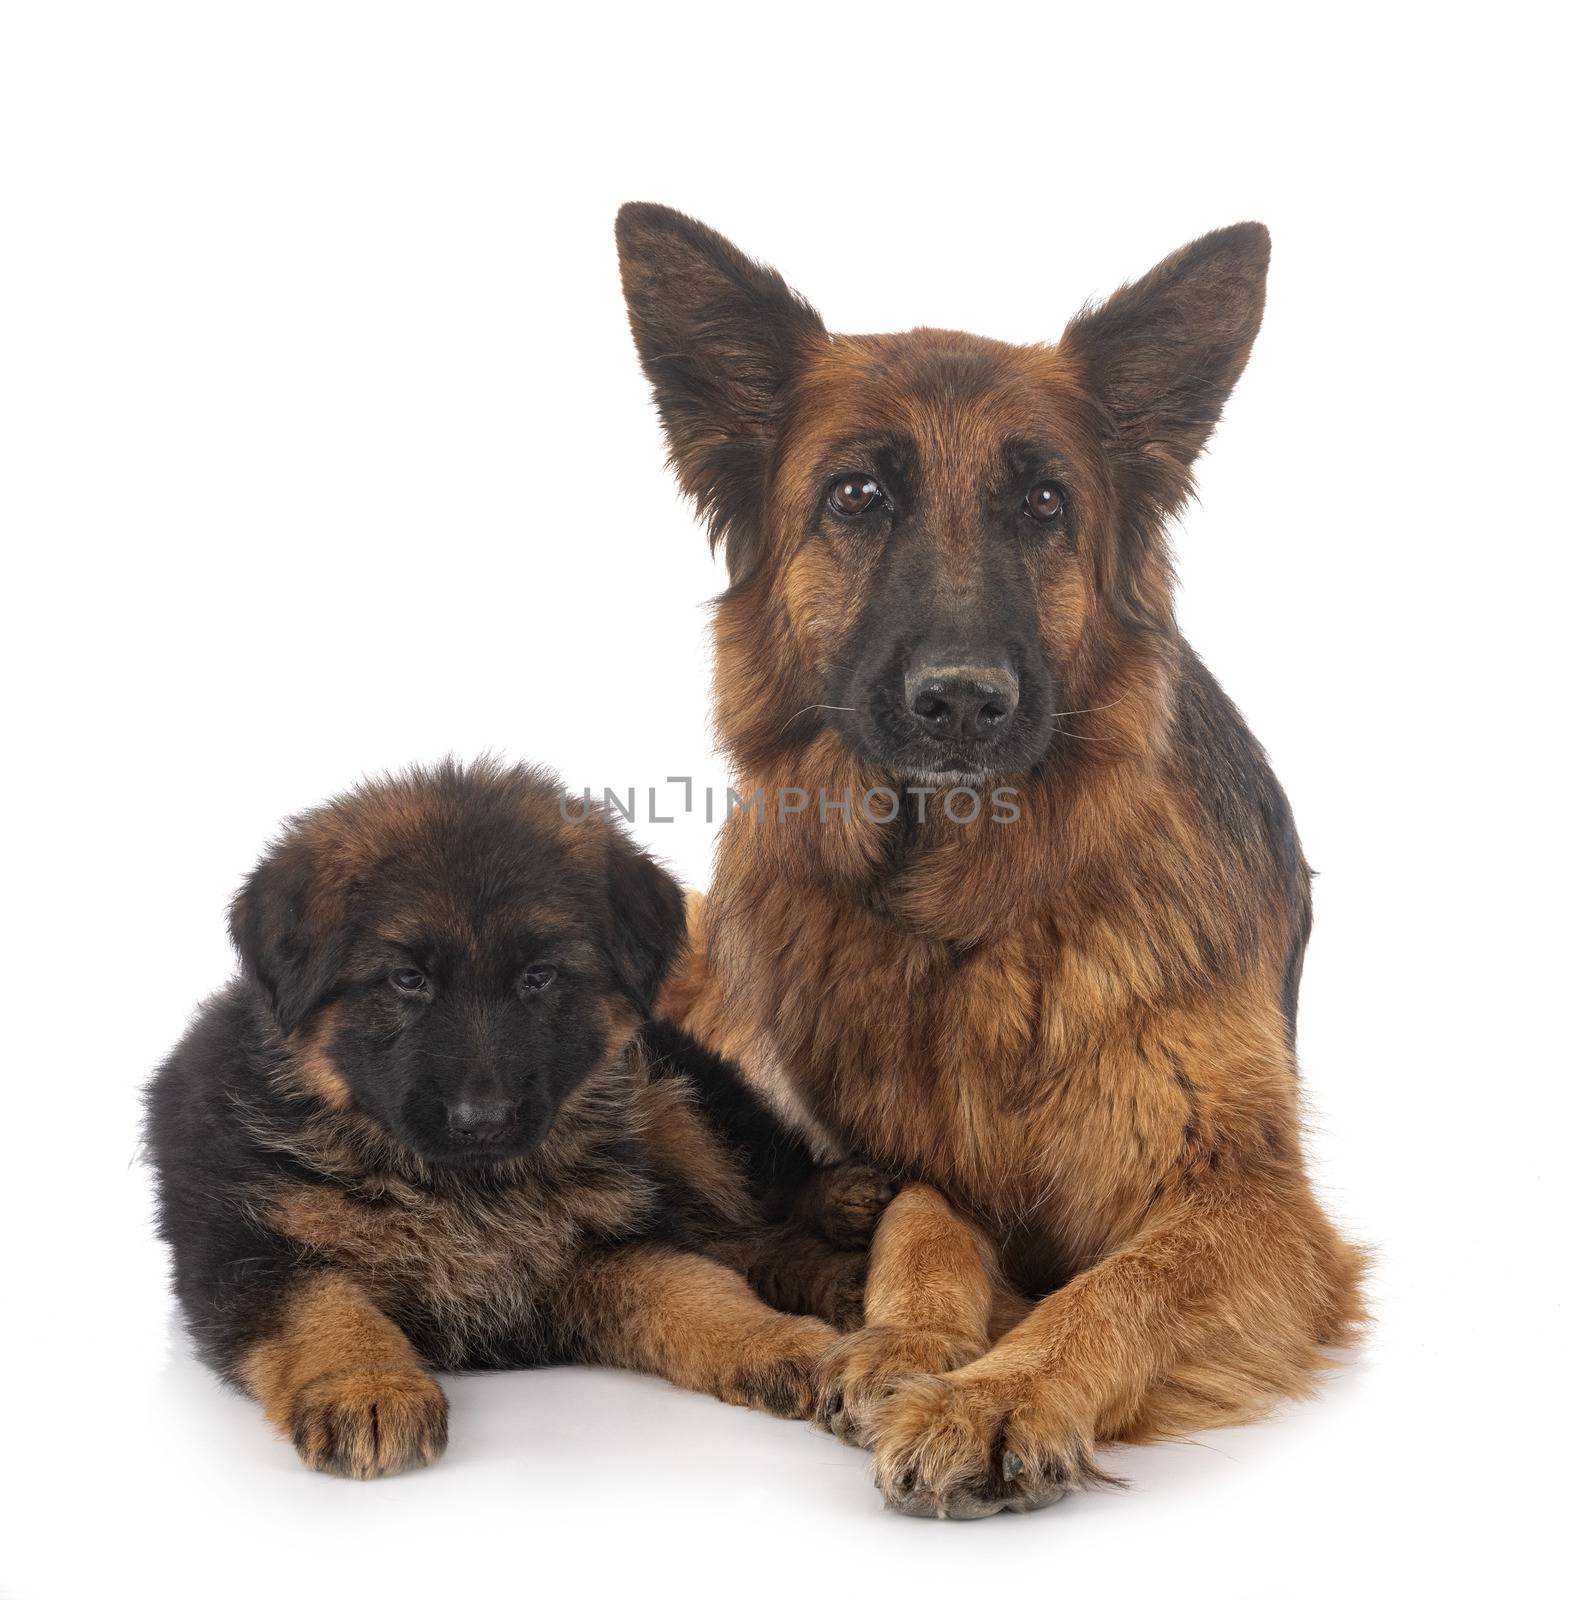 puppy german shepherd and adult by cynoclub